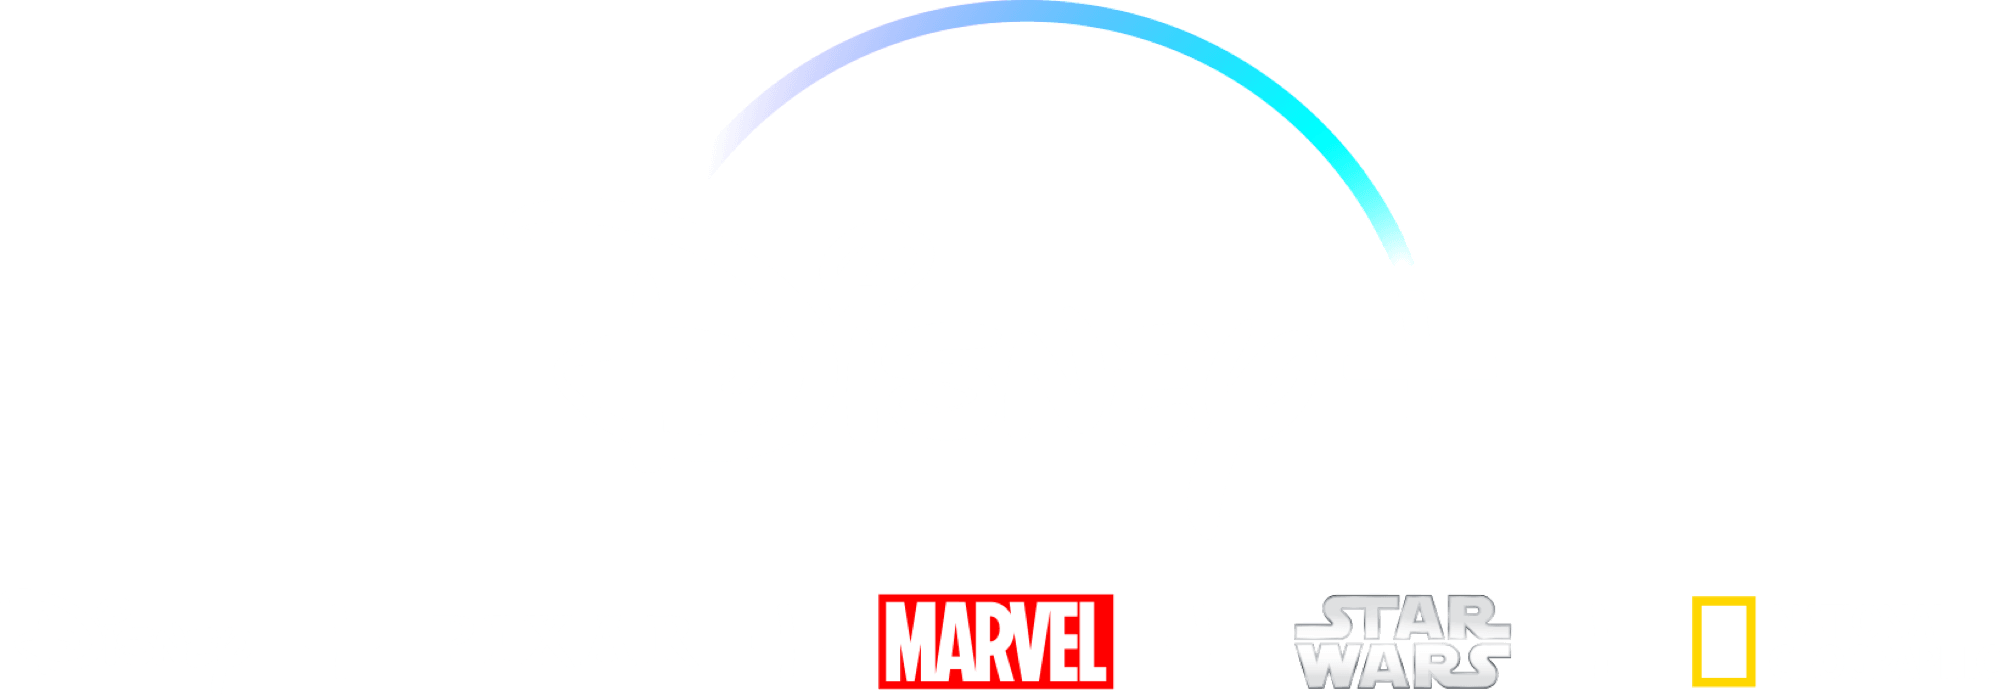 Introducing Disney Disney Australia New Zealand Disney Plus